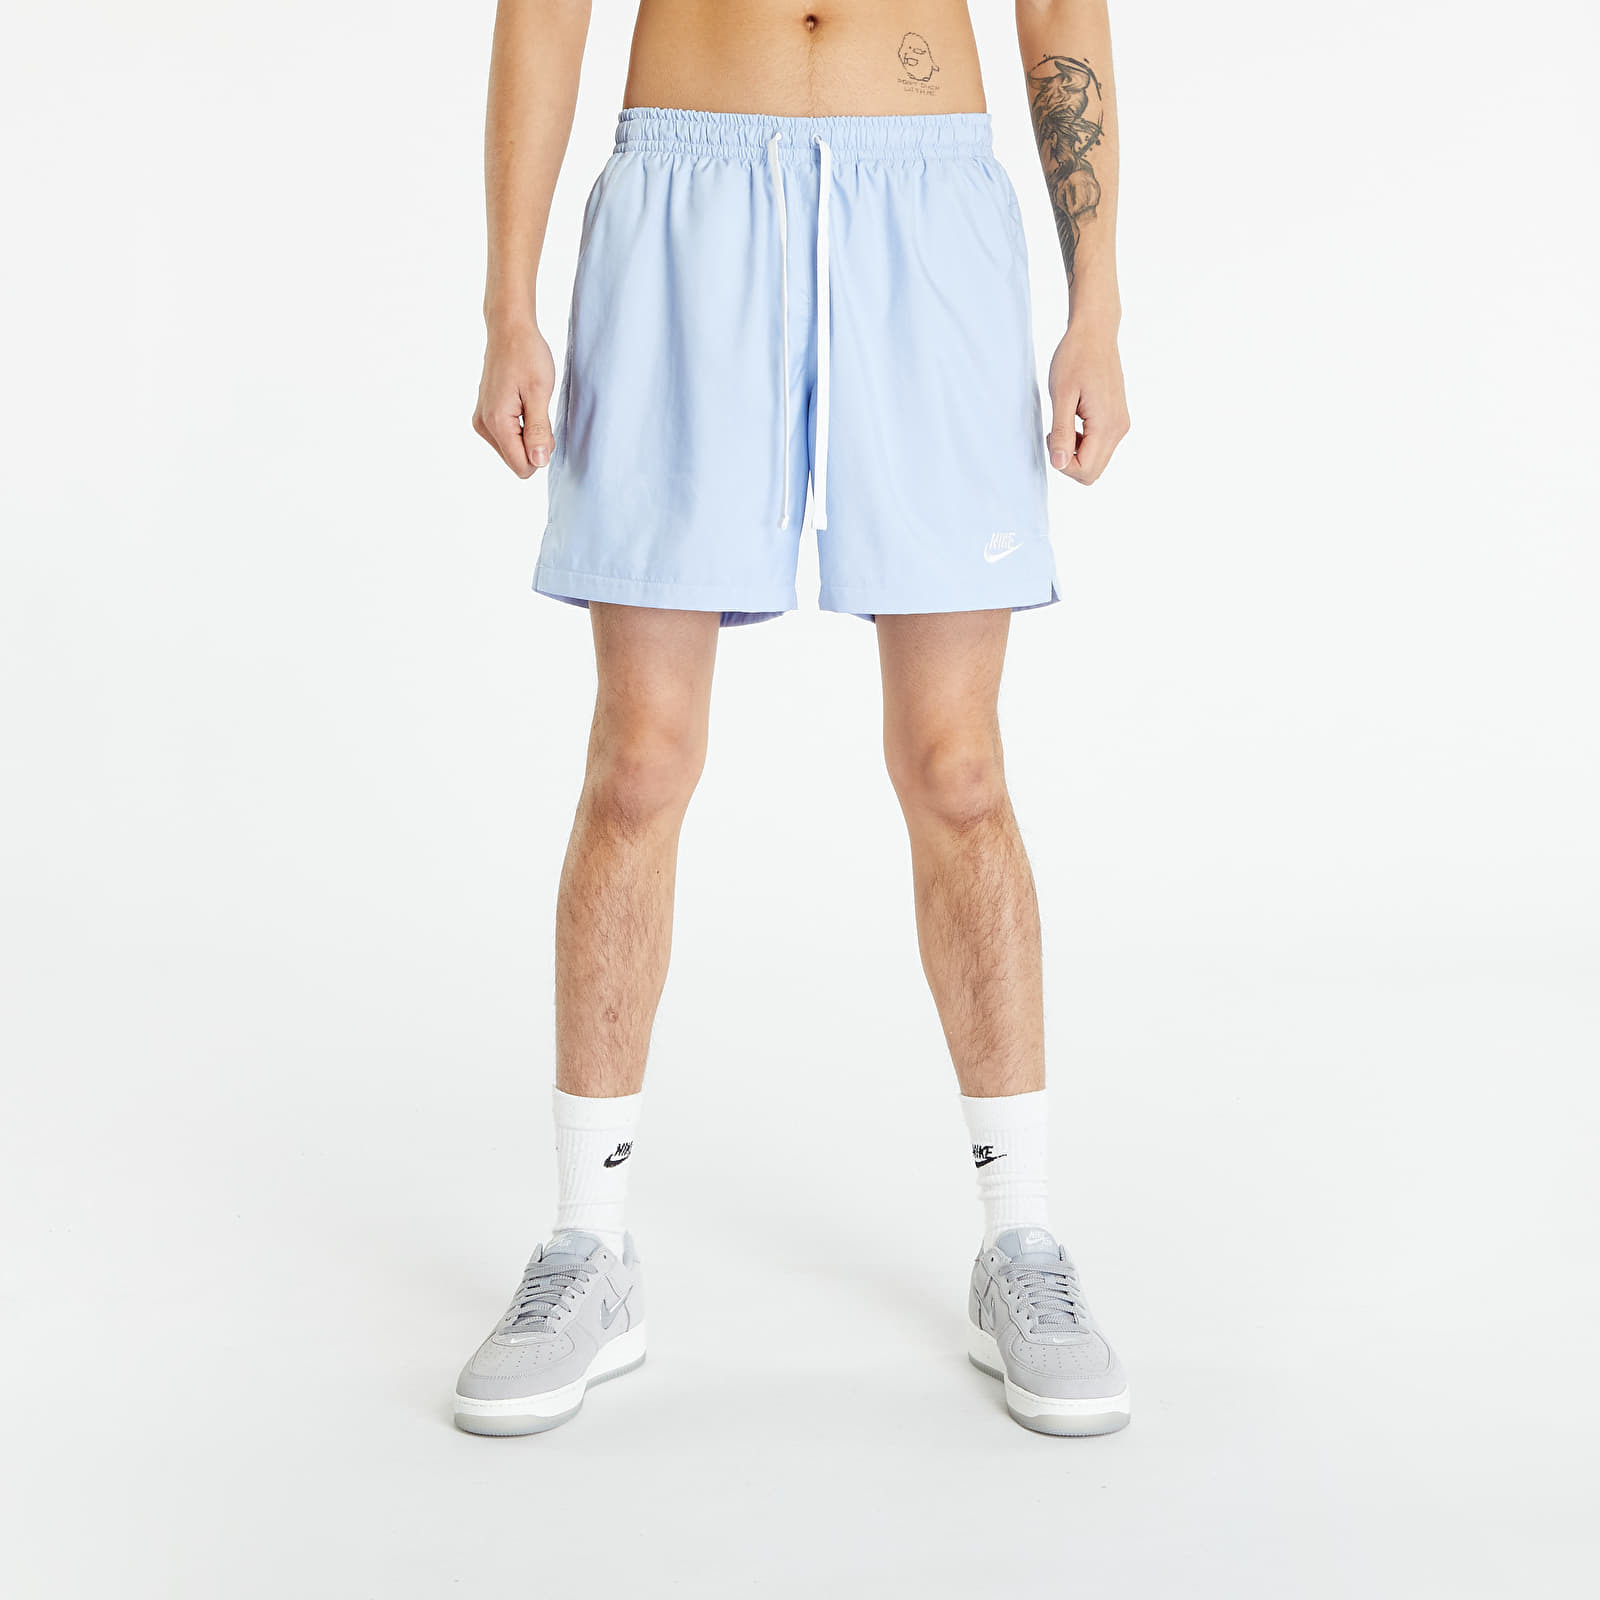 Gent Sportswear in White Footshop - Nike GOOFASH